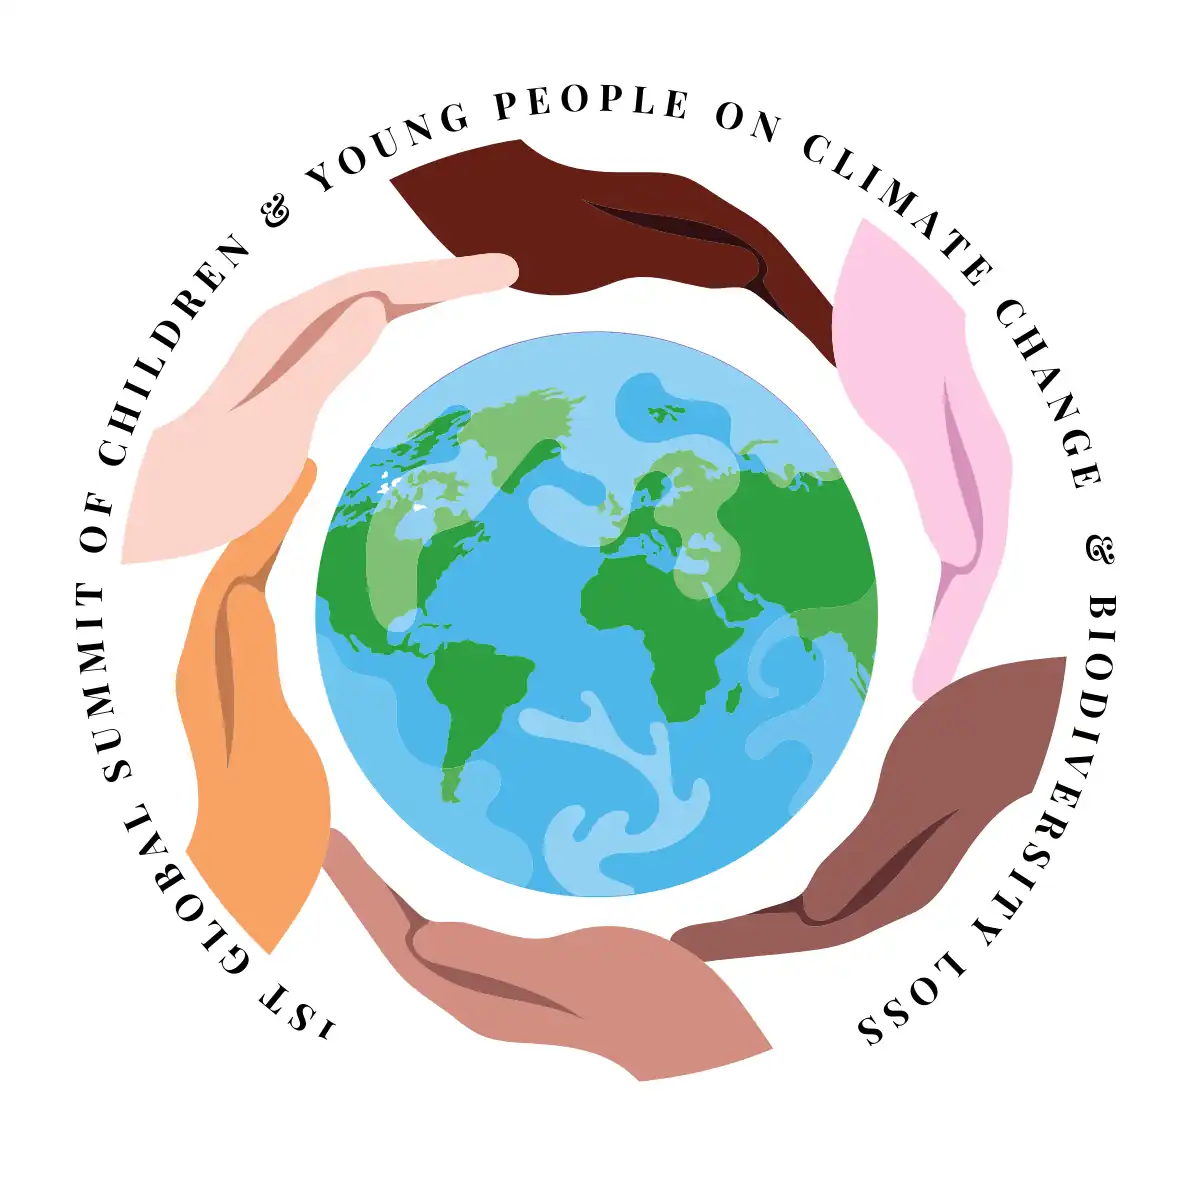 global summit logo